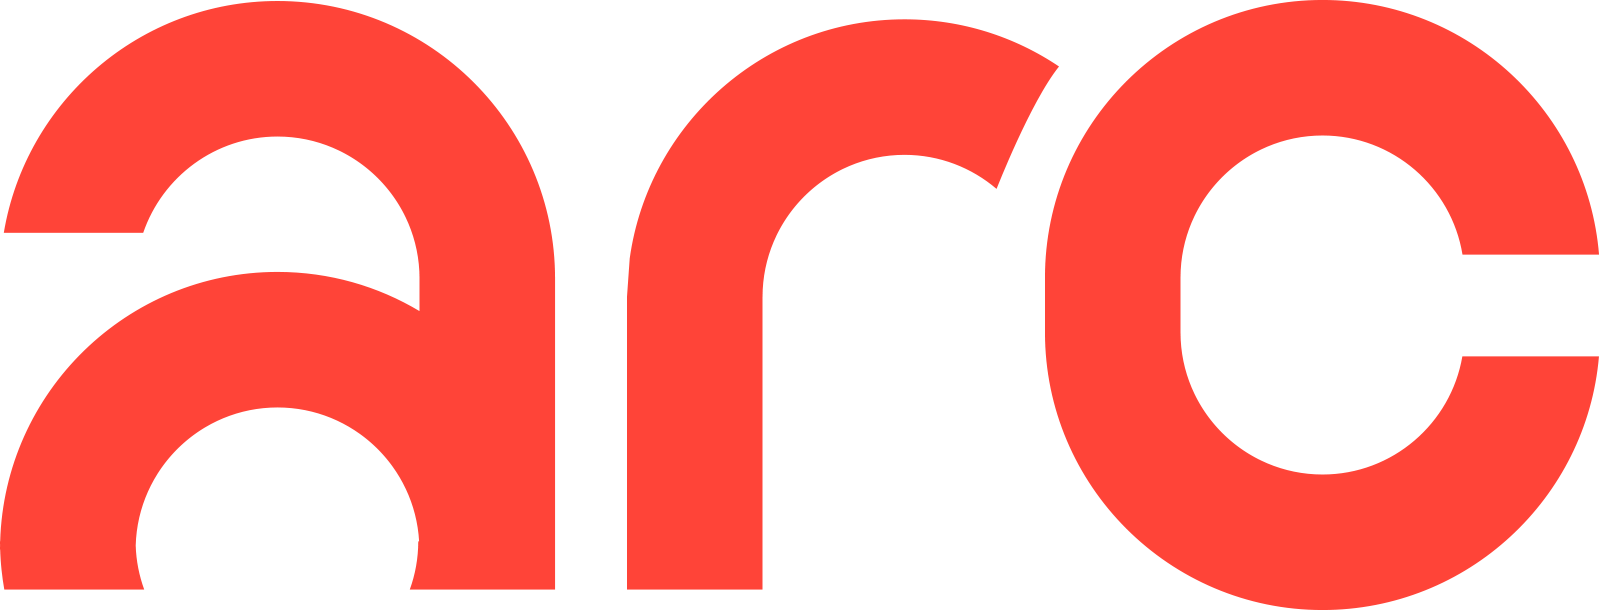 Logo ARC